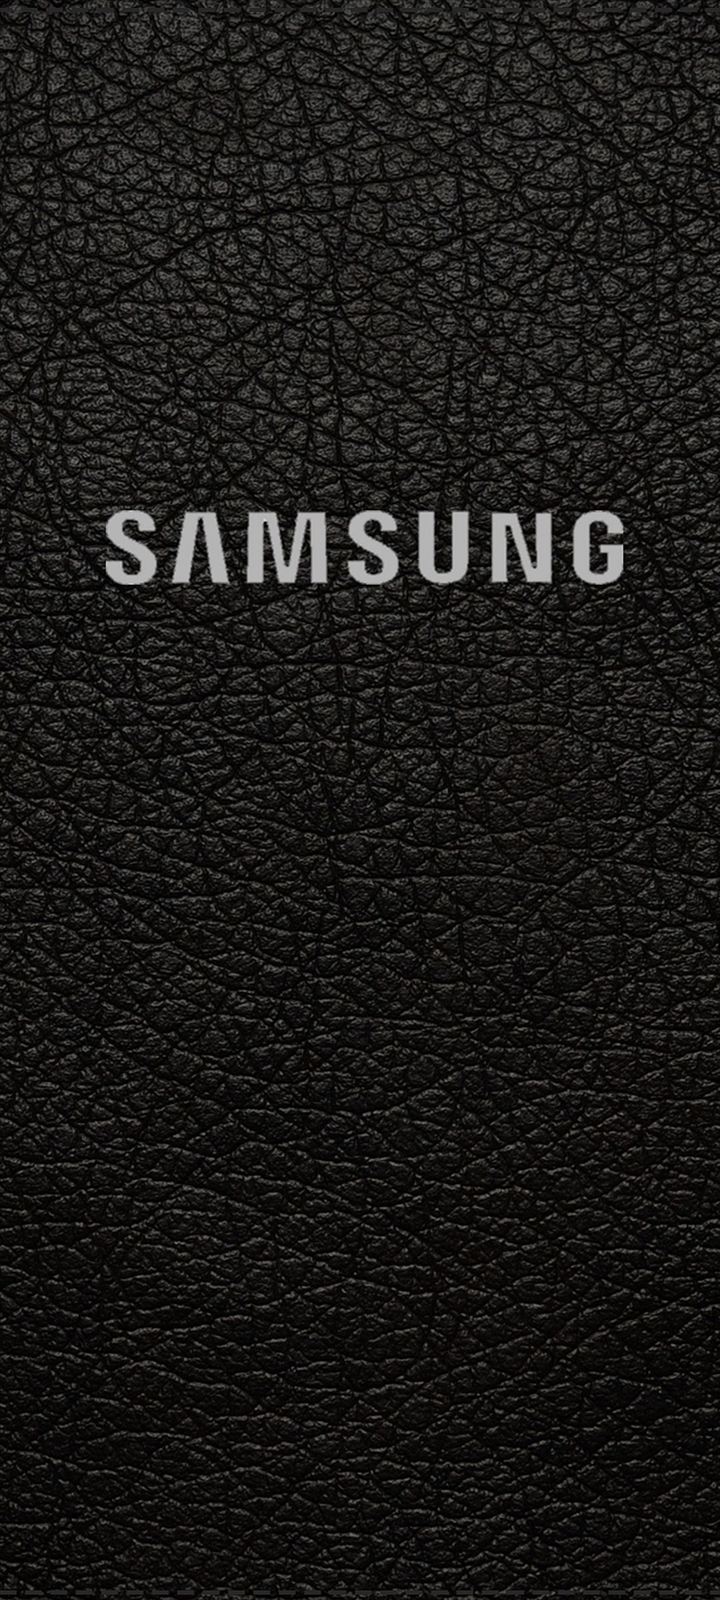 Samsung レザー 黒 革 Moto E7 Power Androidスマホ壁紙 待ち受け スマラン